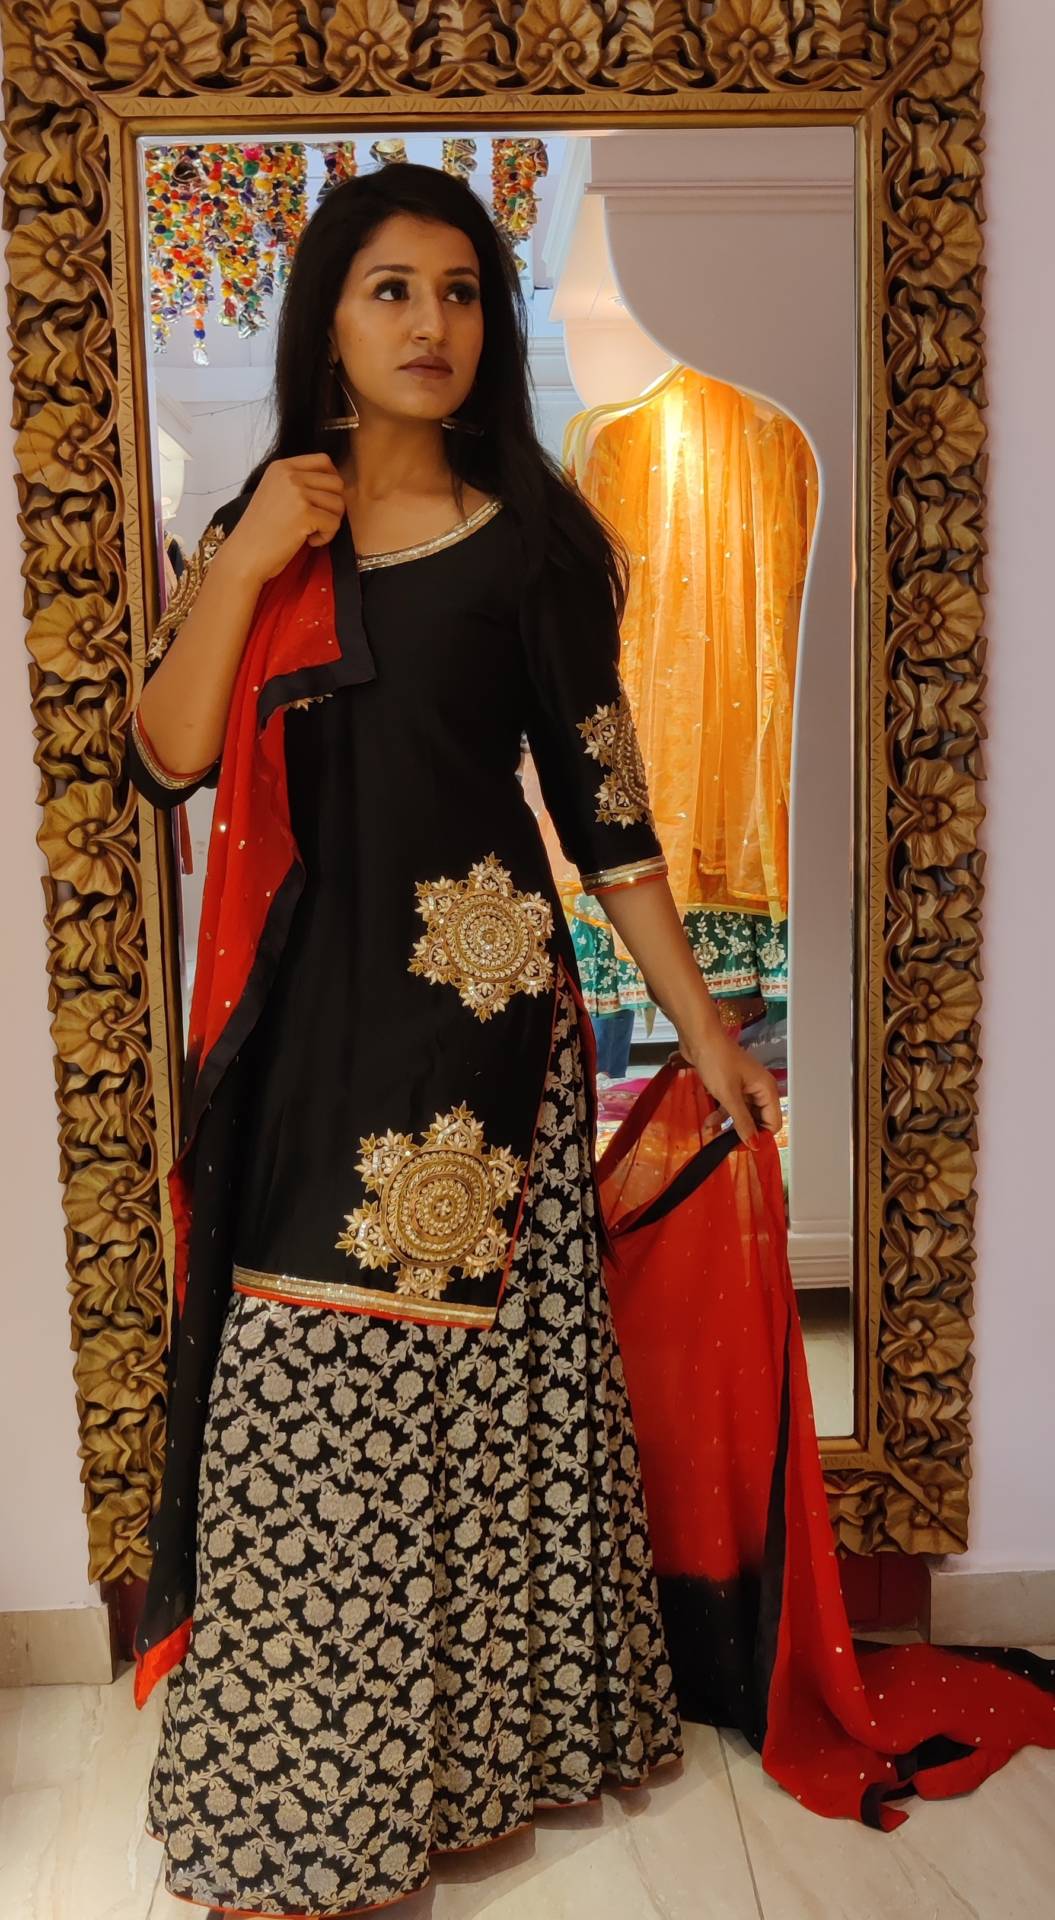 New! Rajasthani Style Cotton Printed Lehenga Choli kurta with Dupatta | eBay